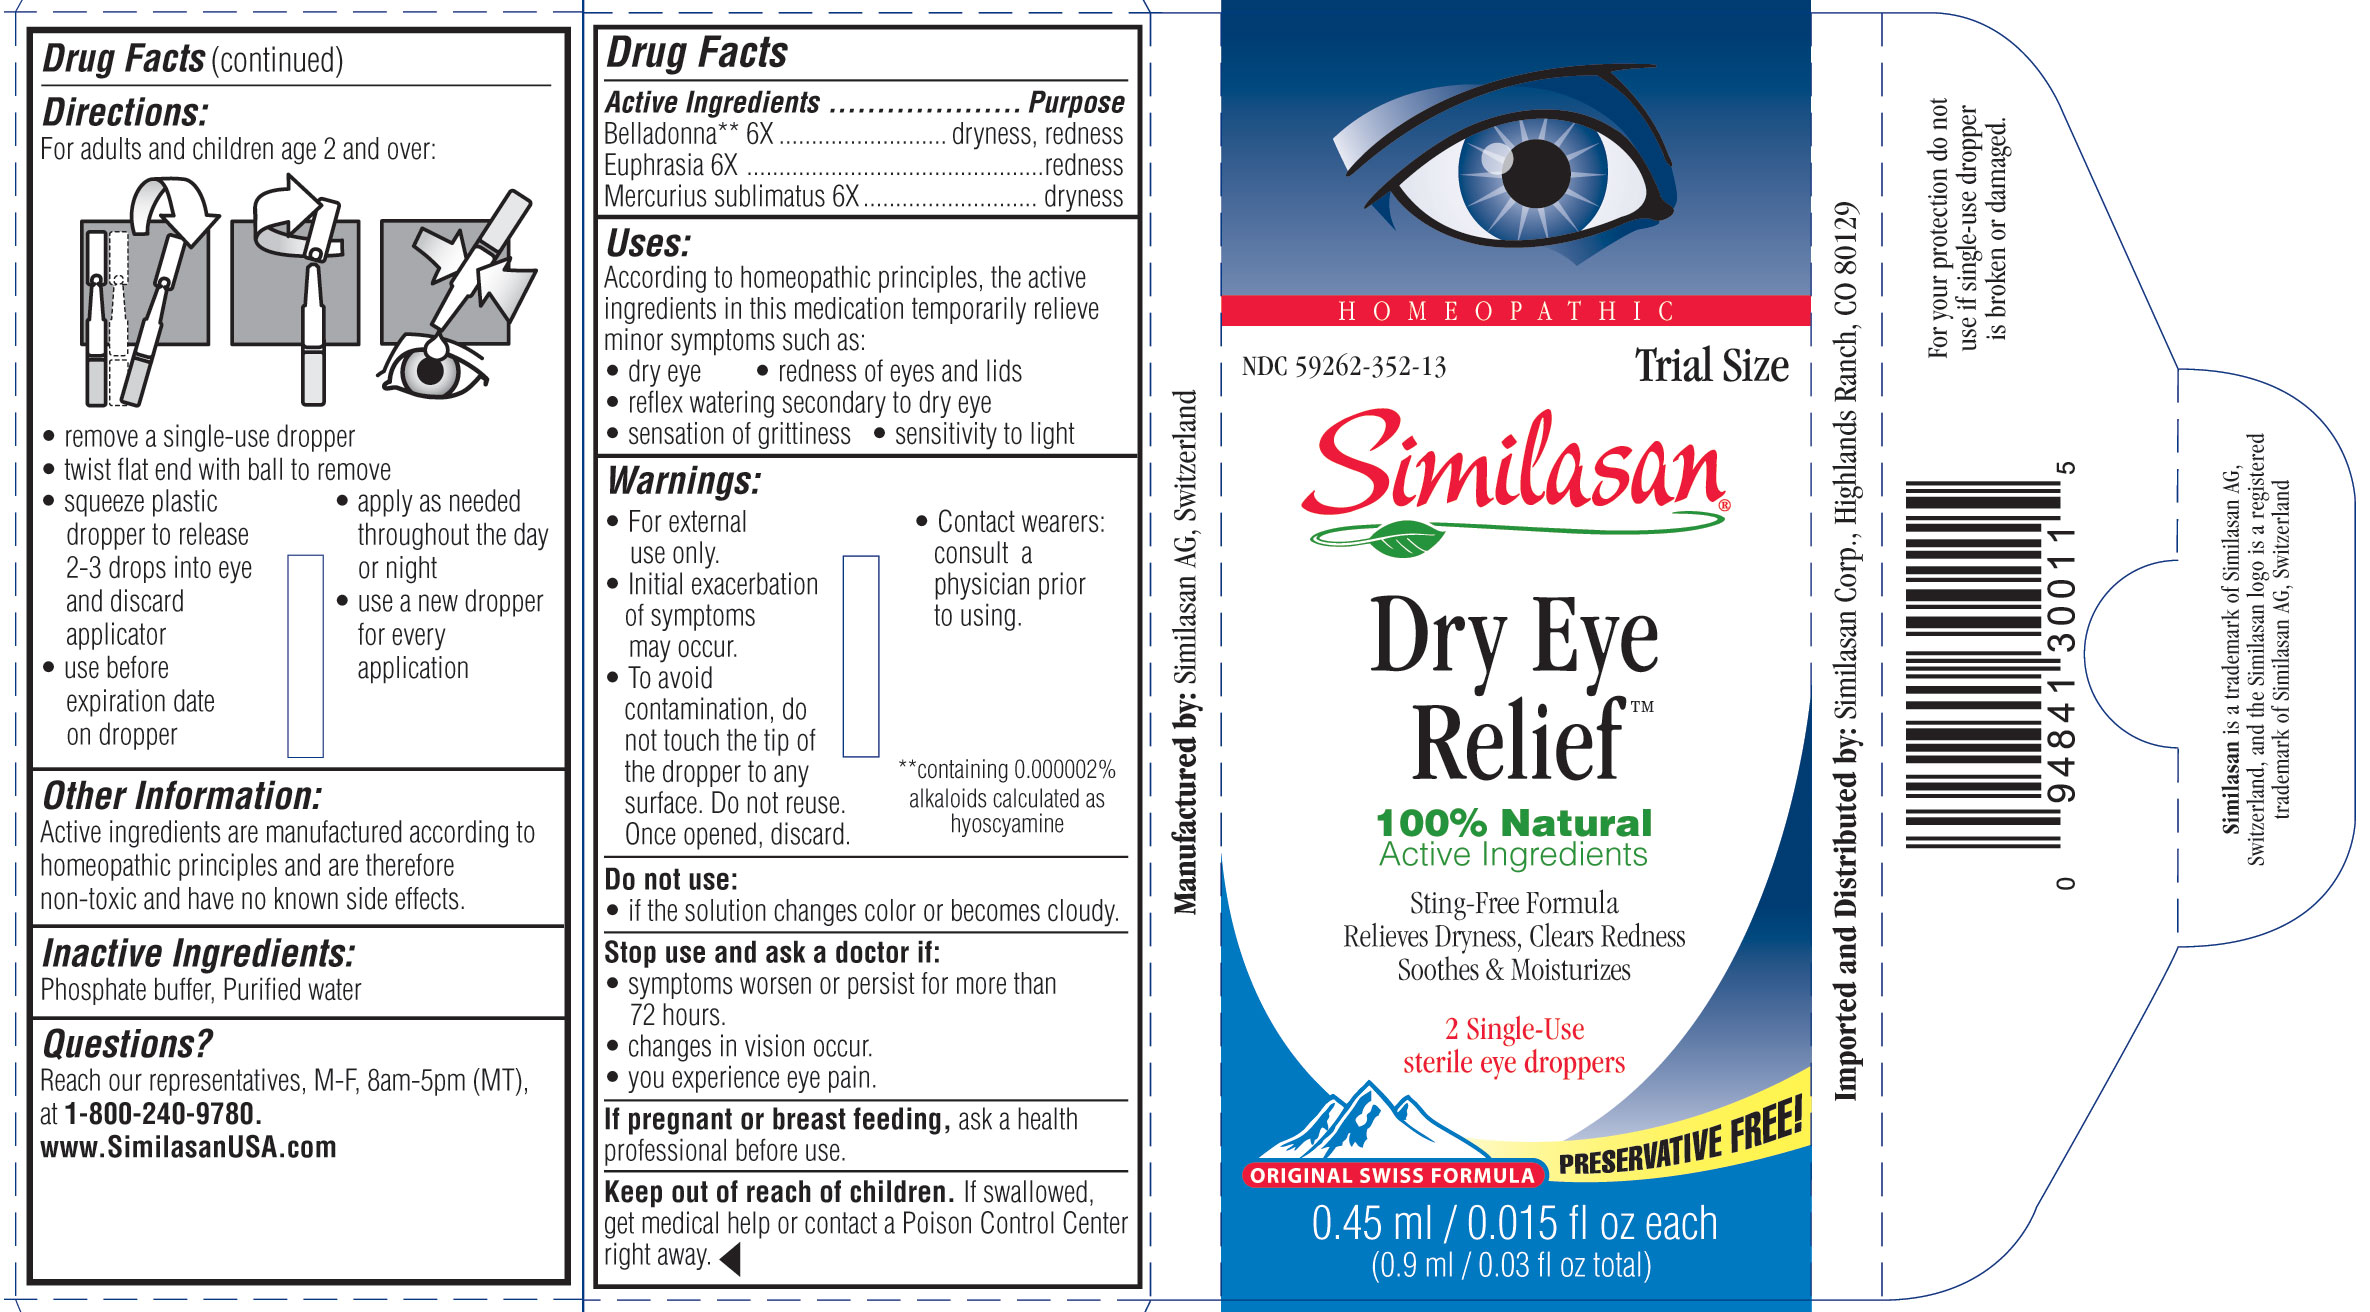 Homeopathic NDC 59262-352-13 Similasan Dry Eye Relief Preservative Free 2 Single-Use sterile eye drops 0.45 ml/ 0.015 fl oz each